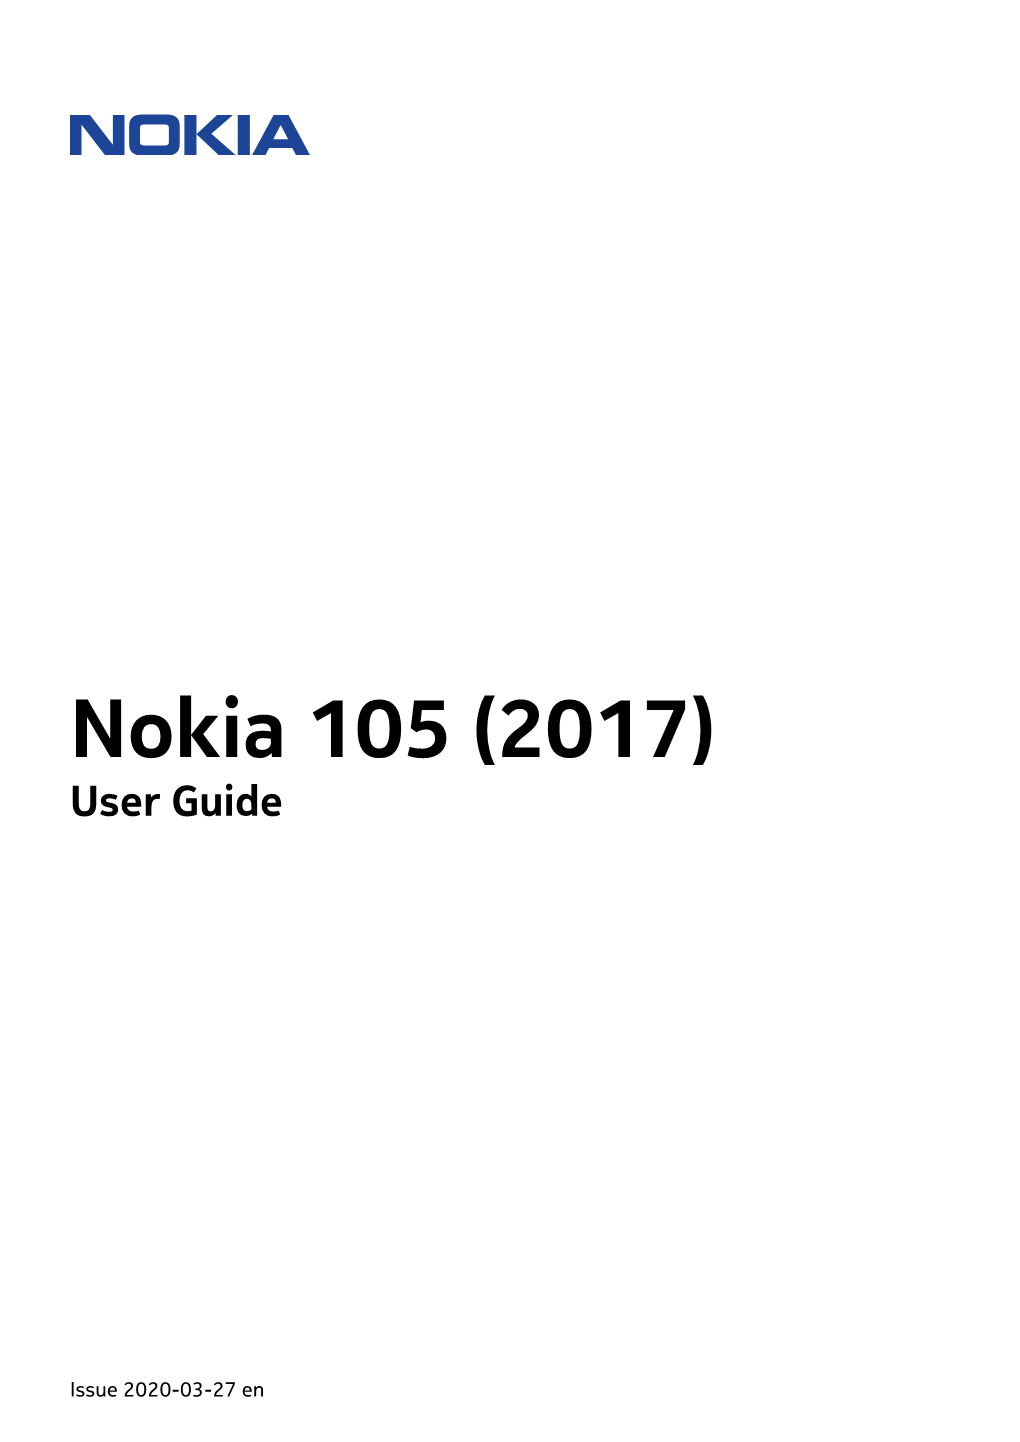 Nokia 105 (2017) User Guide